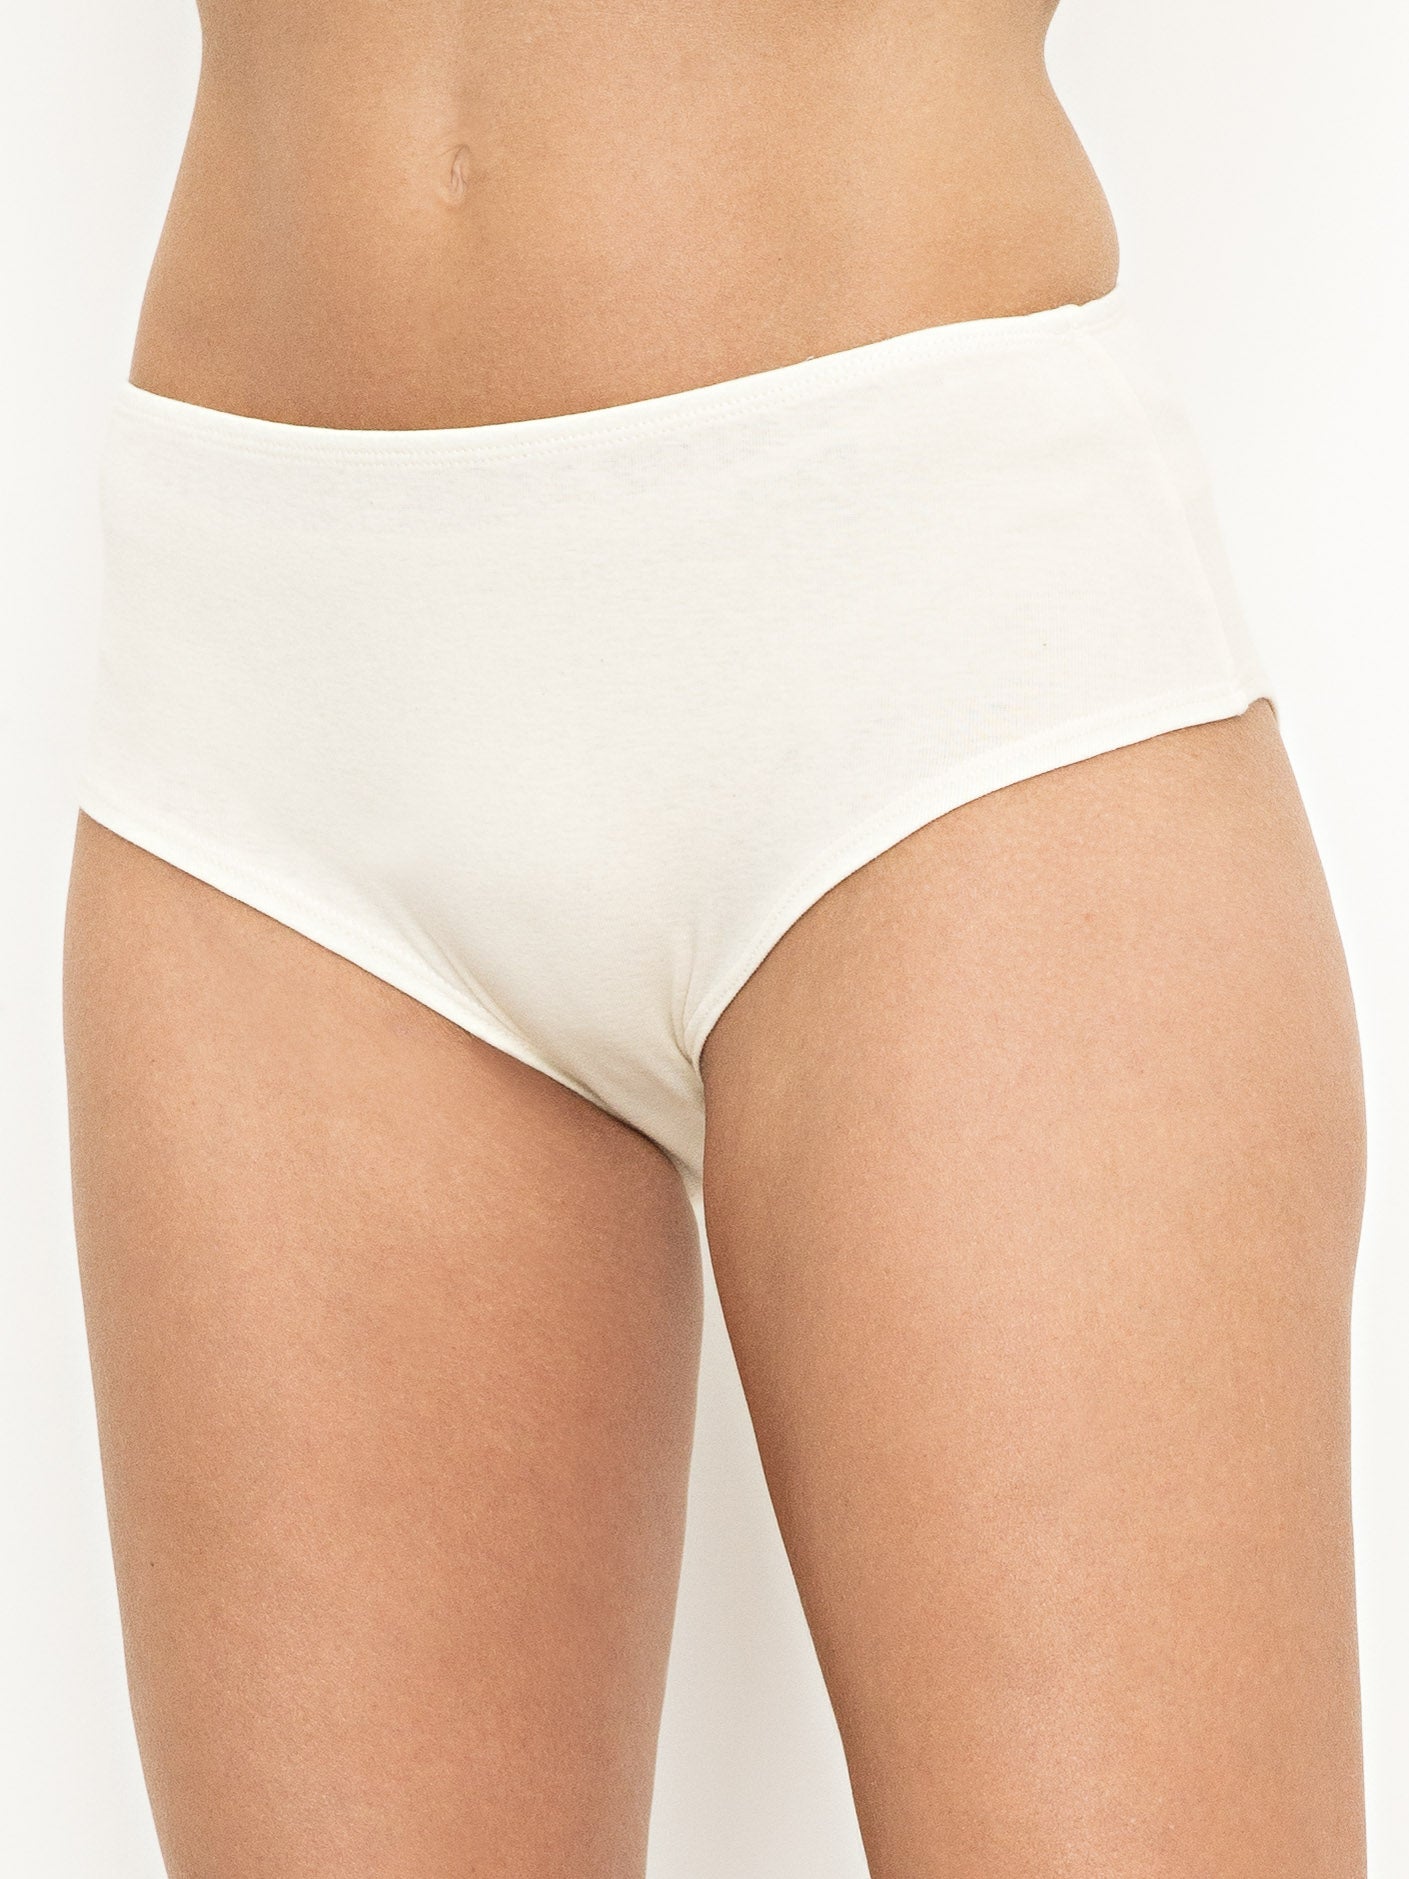 Wholesale bra size b 36 For Supportive Underwear 